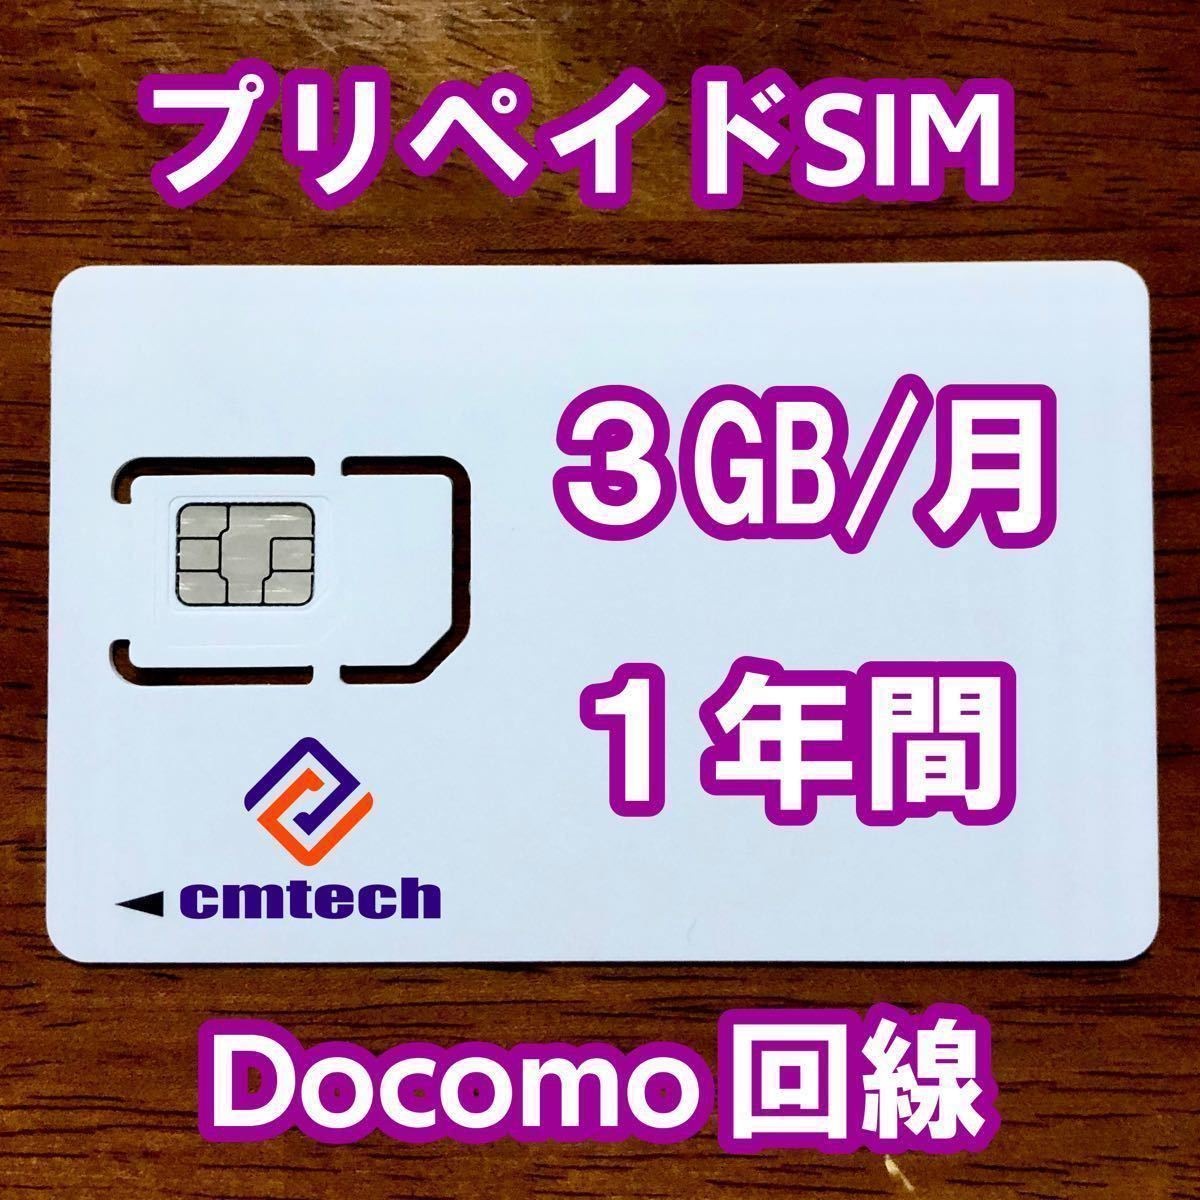 Docomo回線 プリペイドsim 3GB/月1年間有効 データ通信simカード - SIM